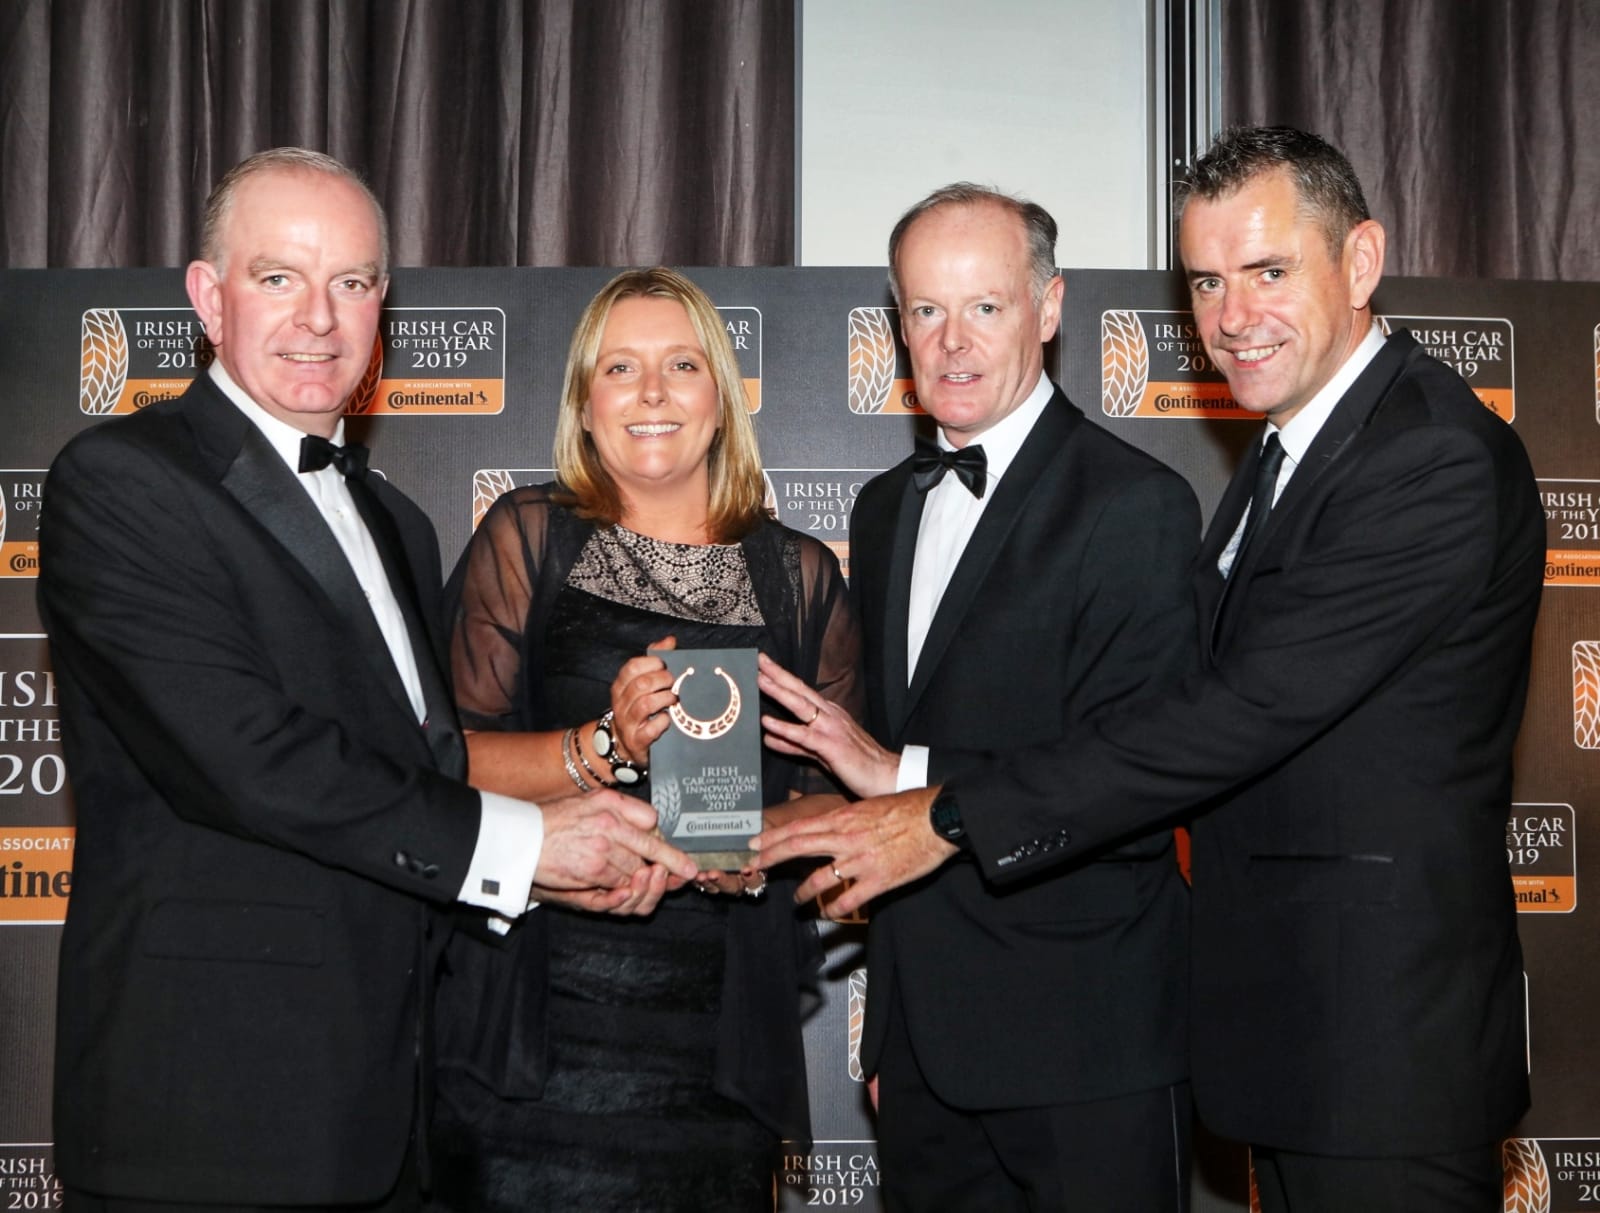 Nissan’s e-Pedal scoops Innovation Award at Irish Car of the Year awards